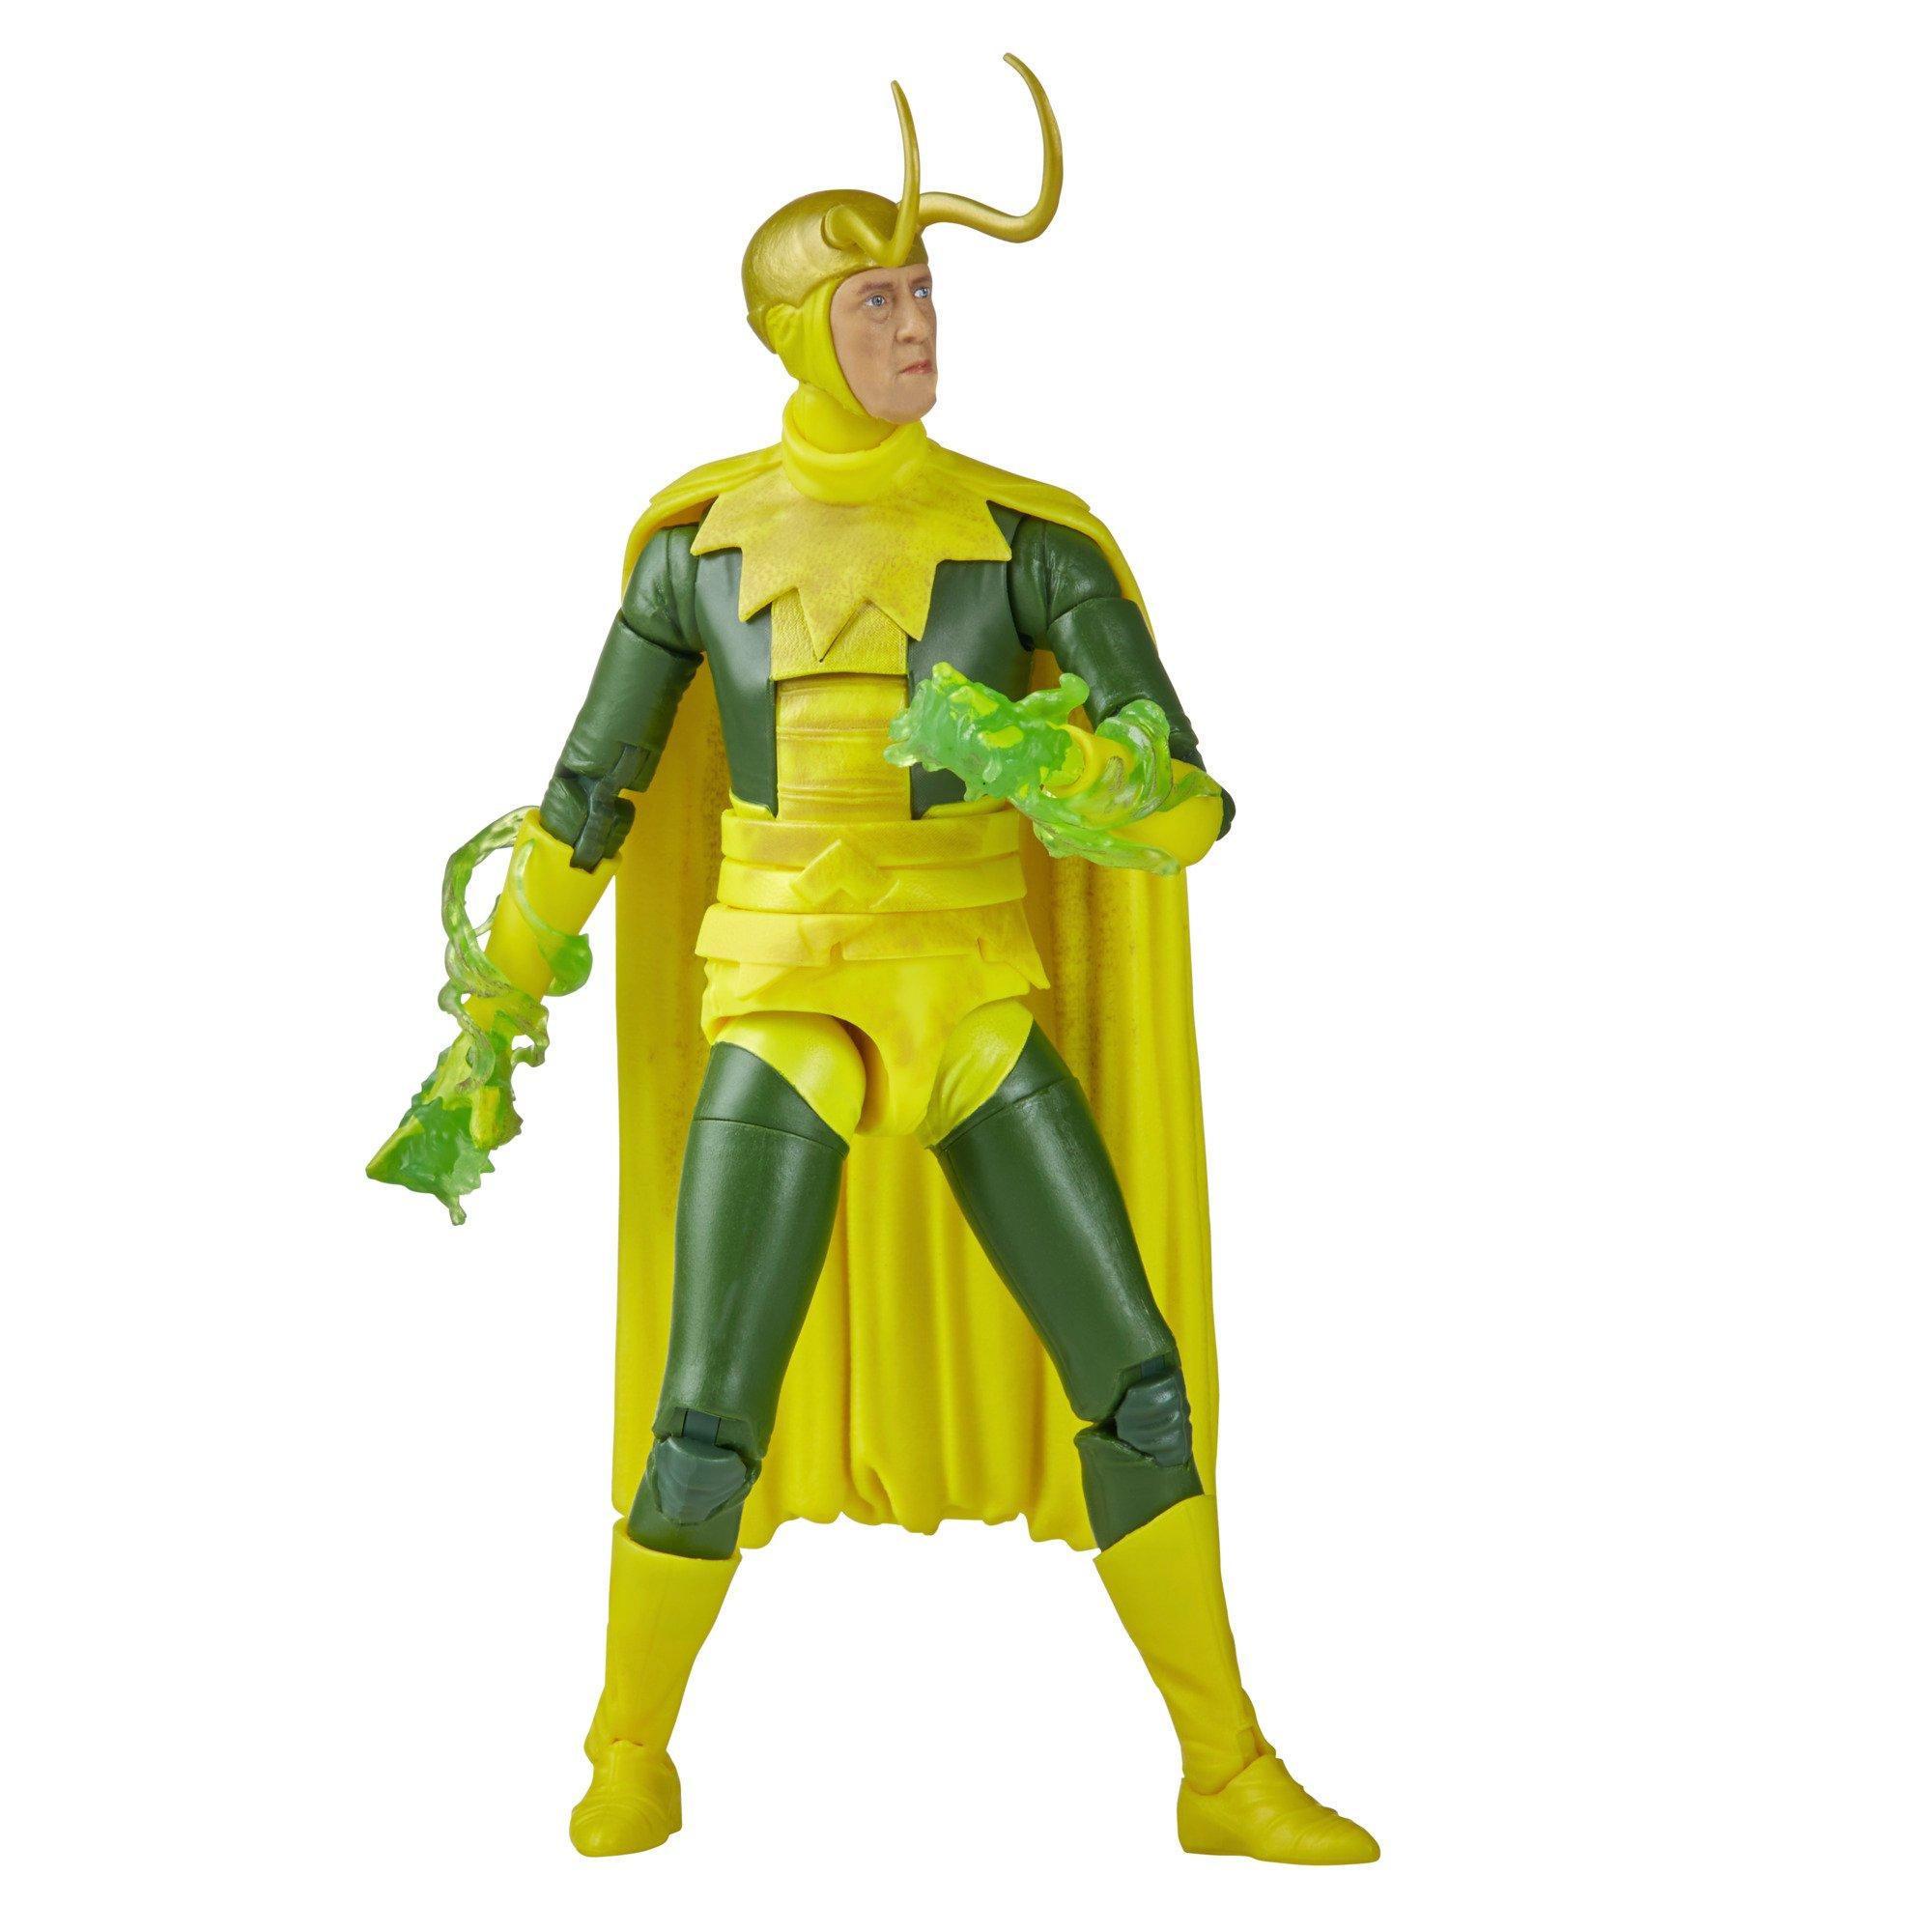 Hasbro Marvel Legends Series Loki Classic Loki 6-in Action Figure